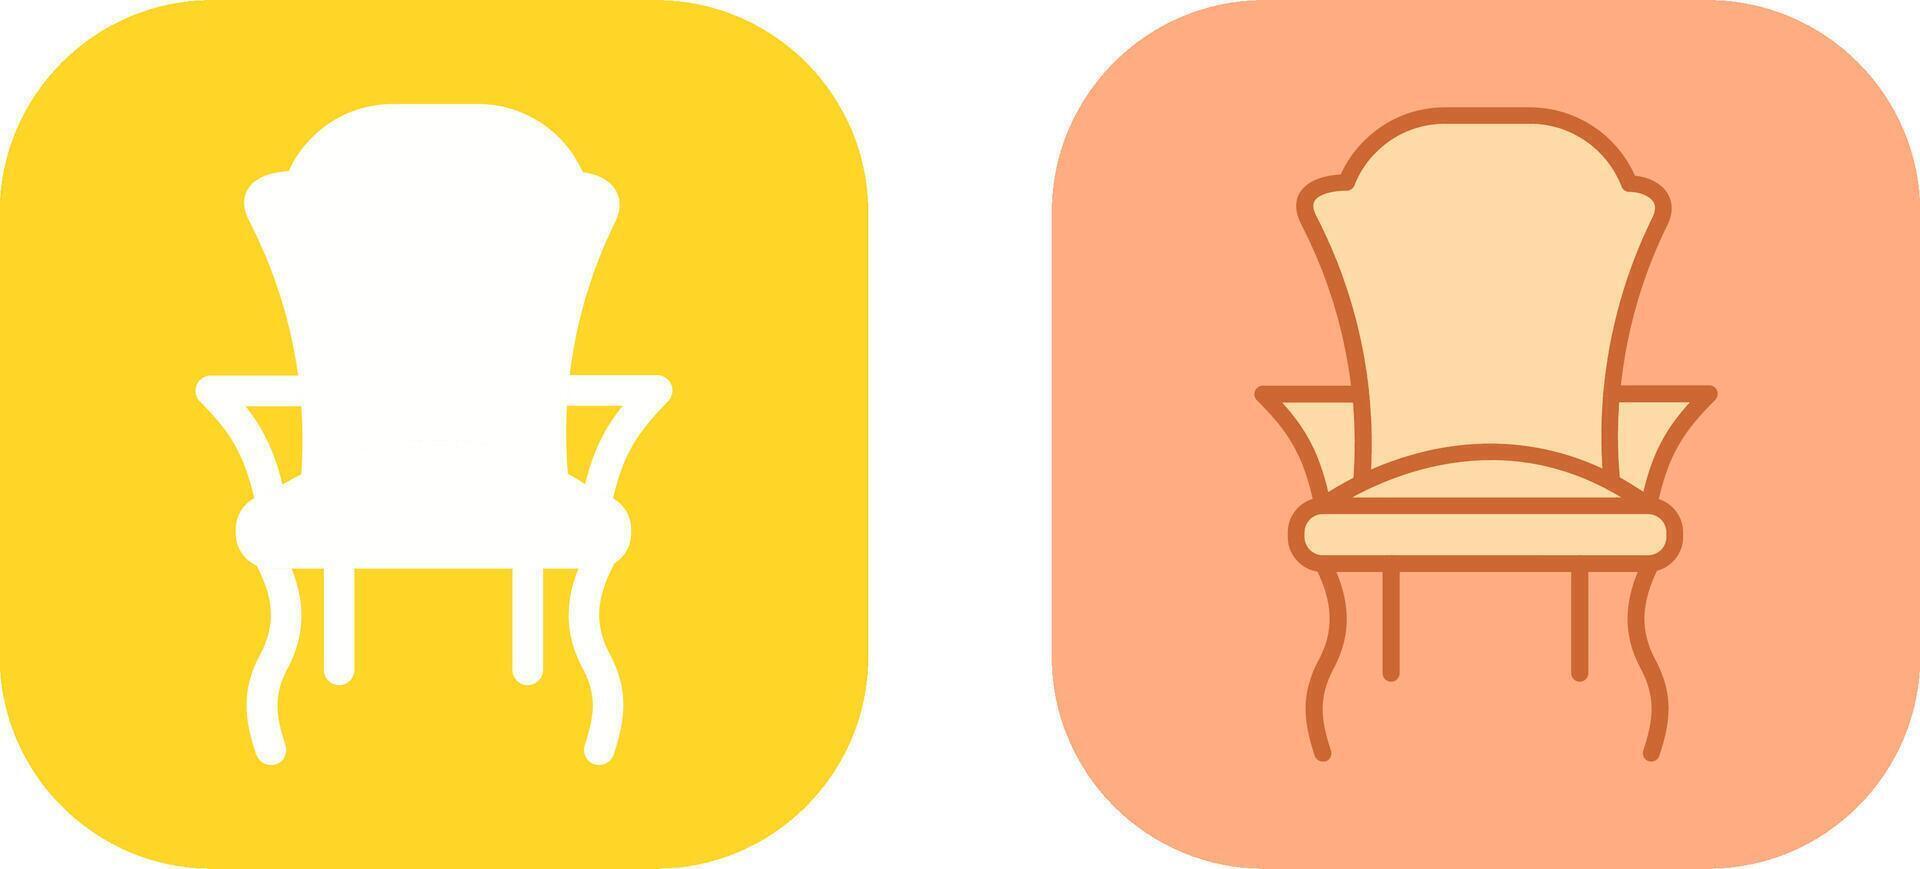 Chair II Icon Design vector